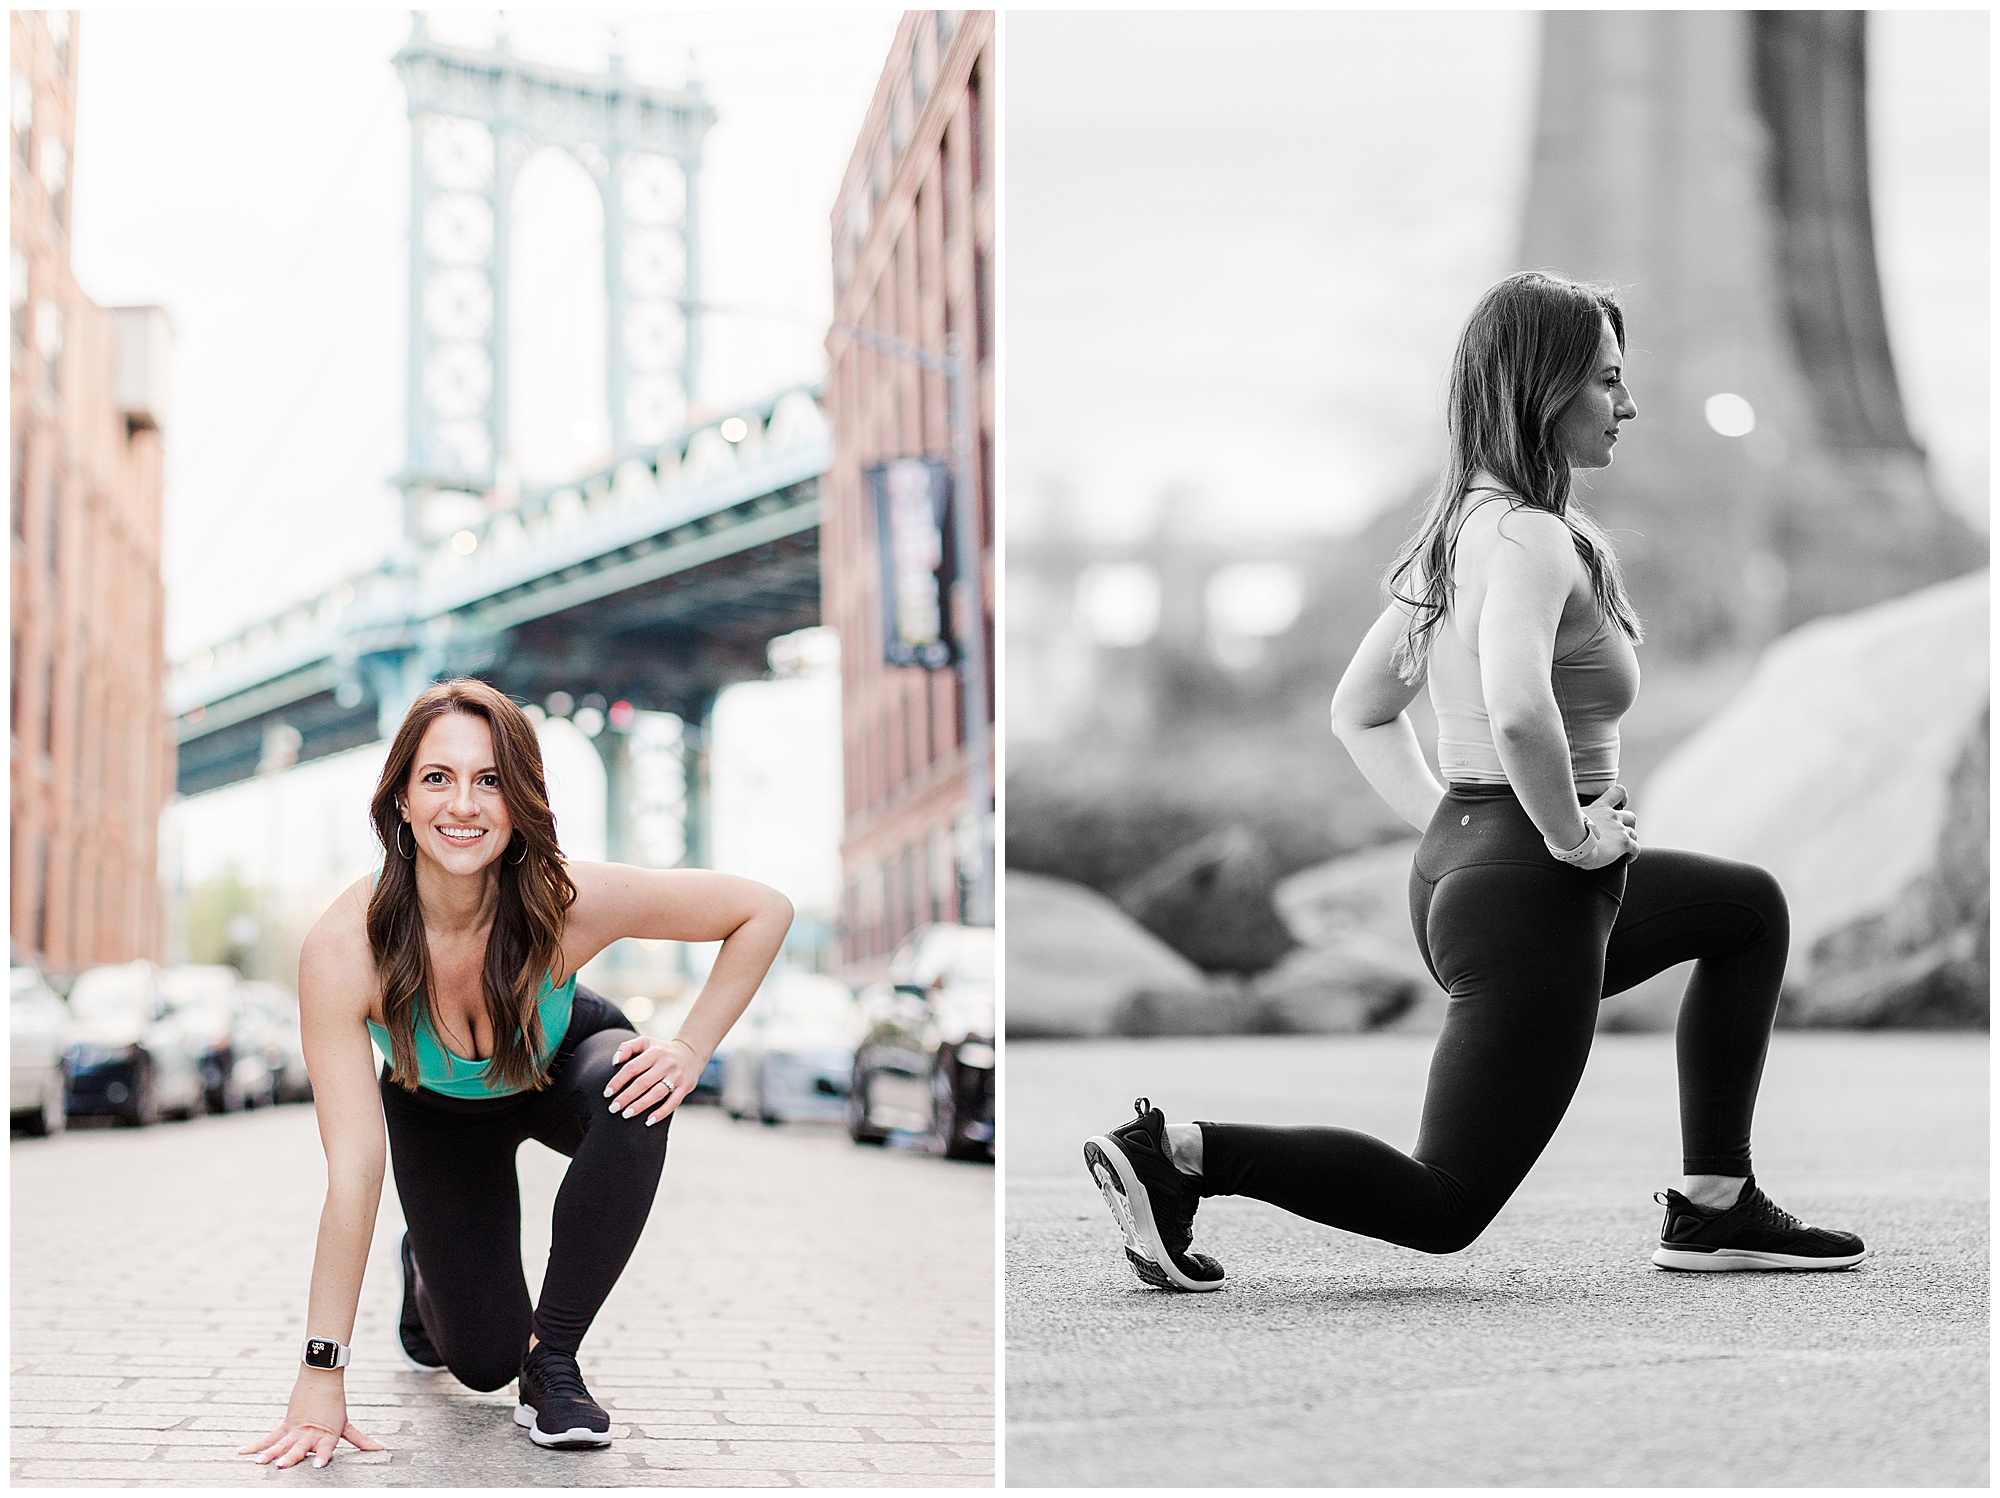 Radiant fitness branding photos in NY